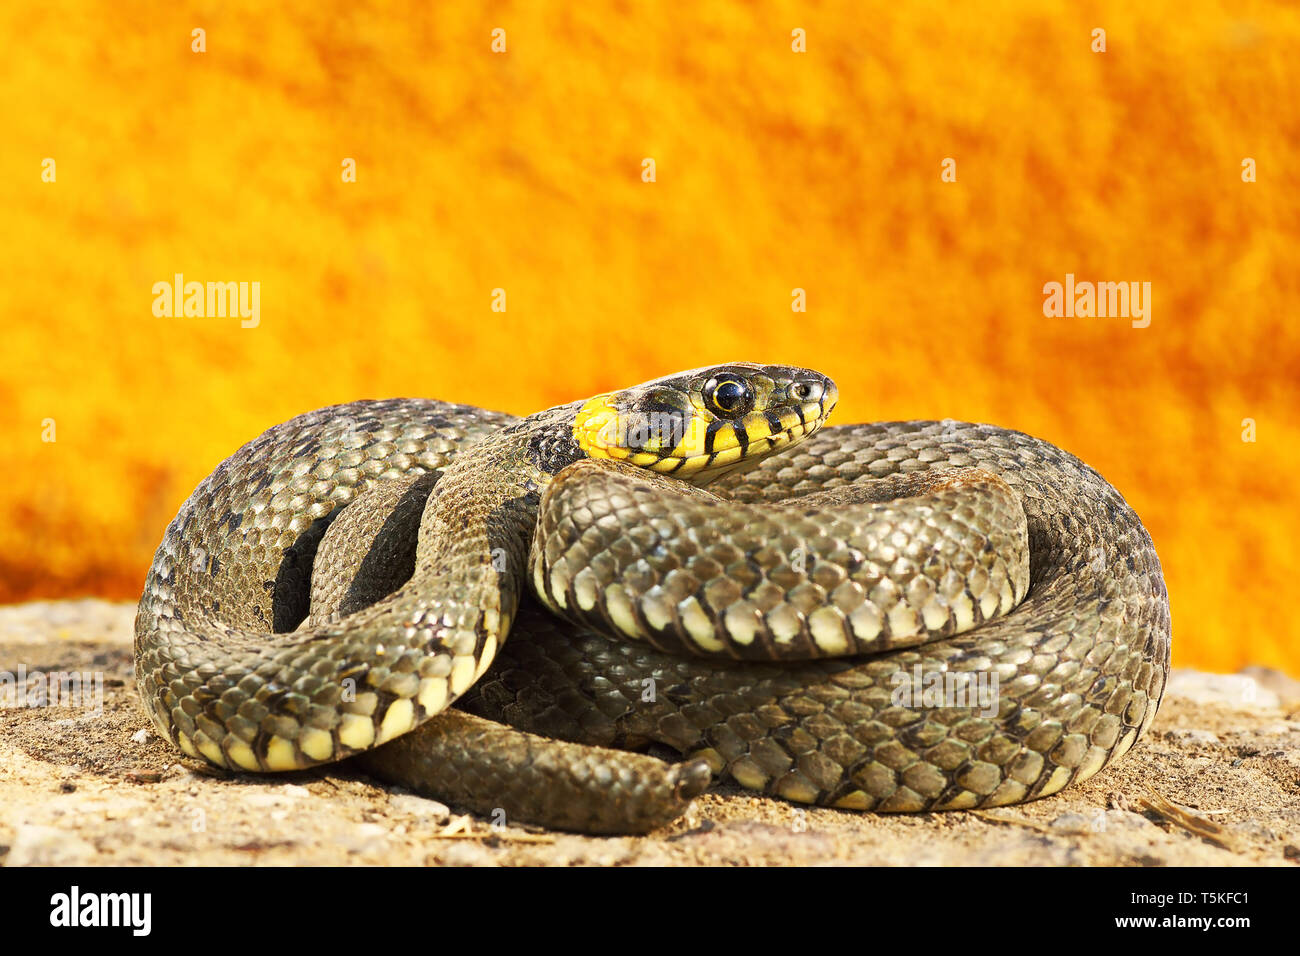 https://c8.alamy.com/comp/T5KFC1/full-length-colorful-grass-snake-natrix-natrix-T5KFC1.jpg